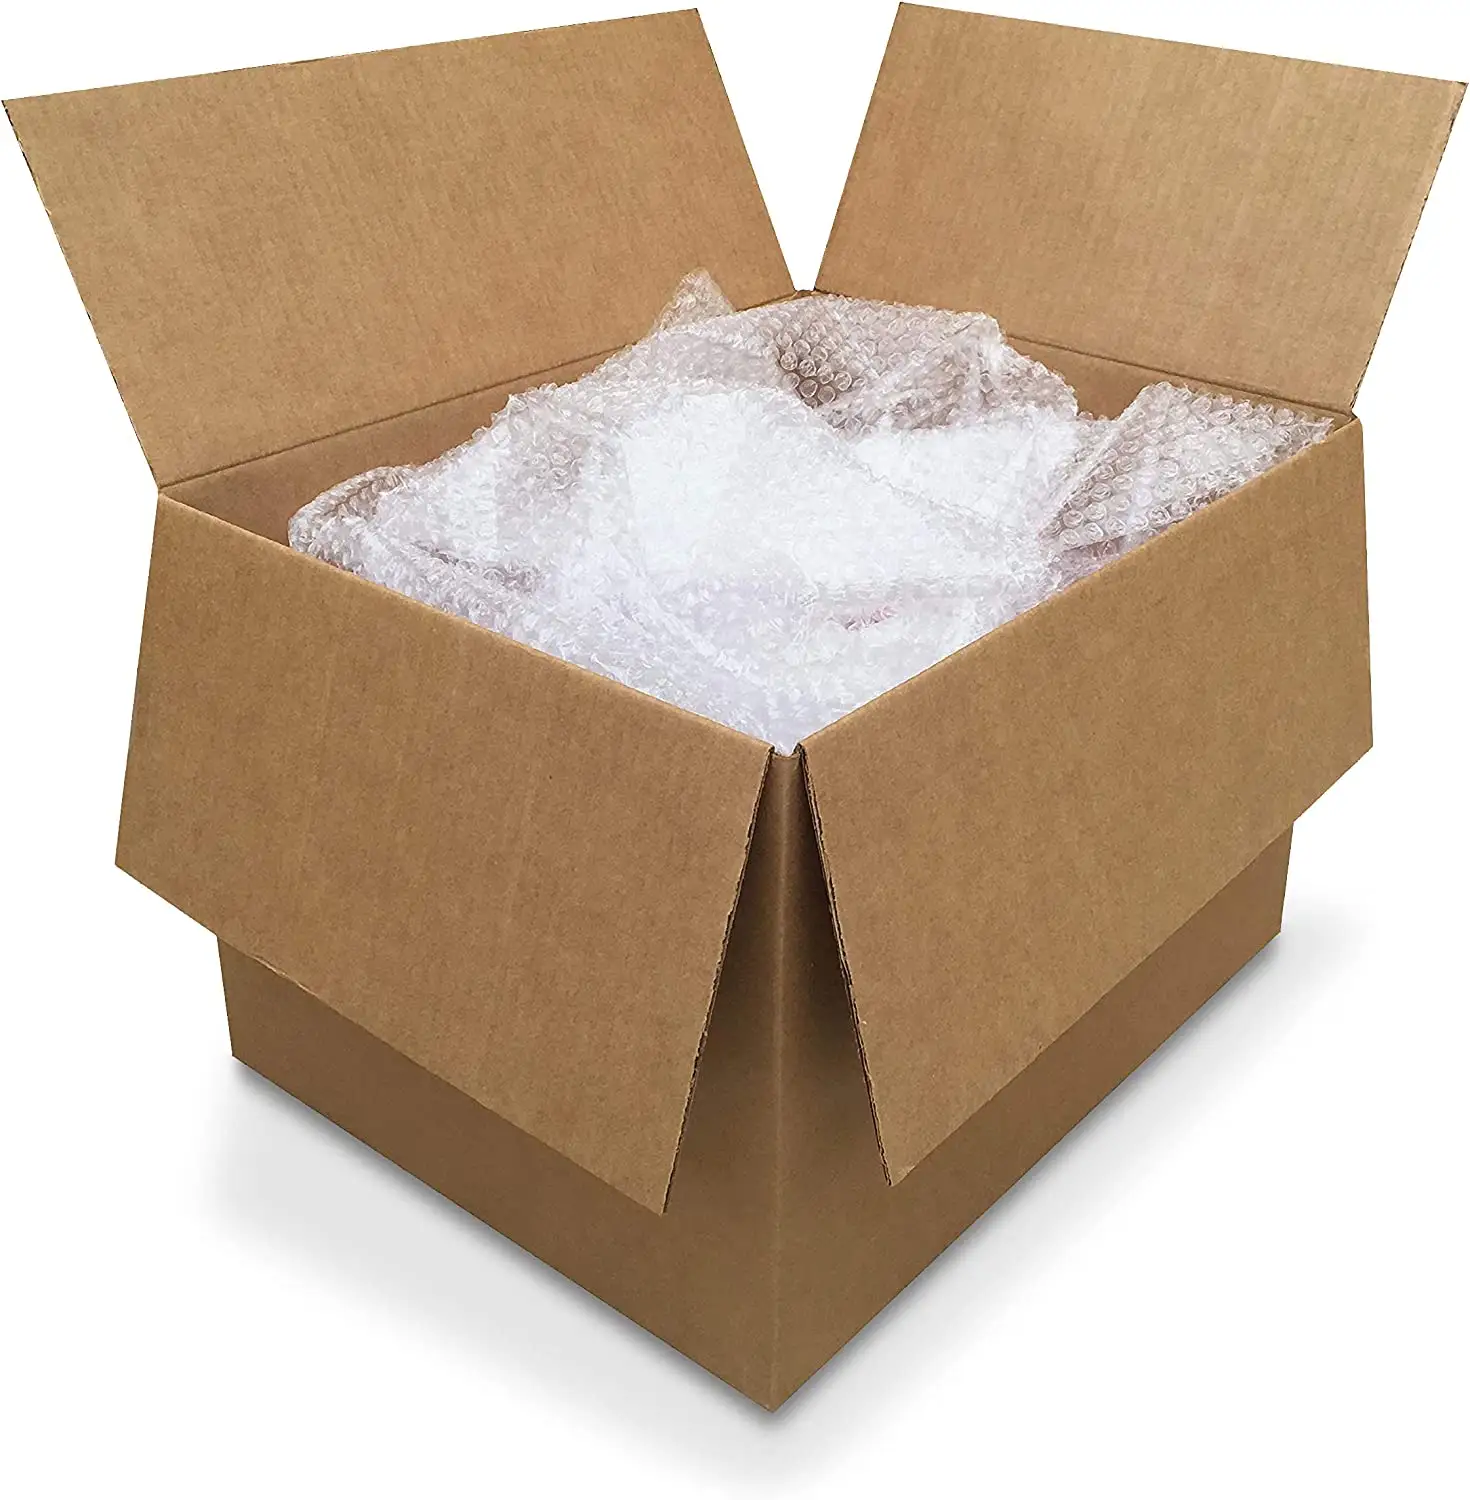 Karton Papier boxen Versand verpackung Wellpappe Versand karton